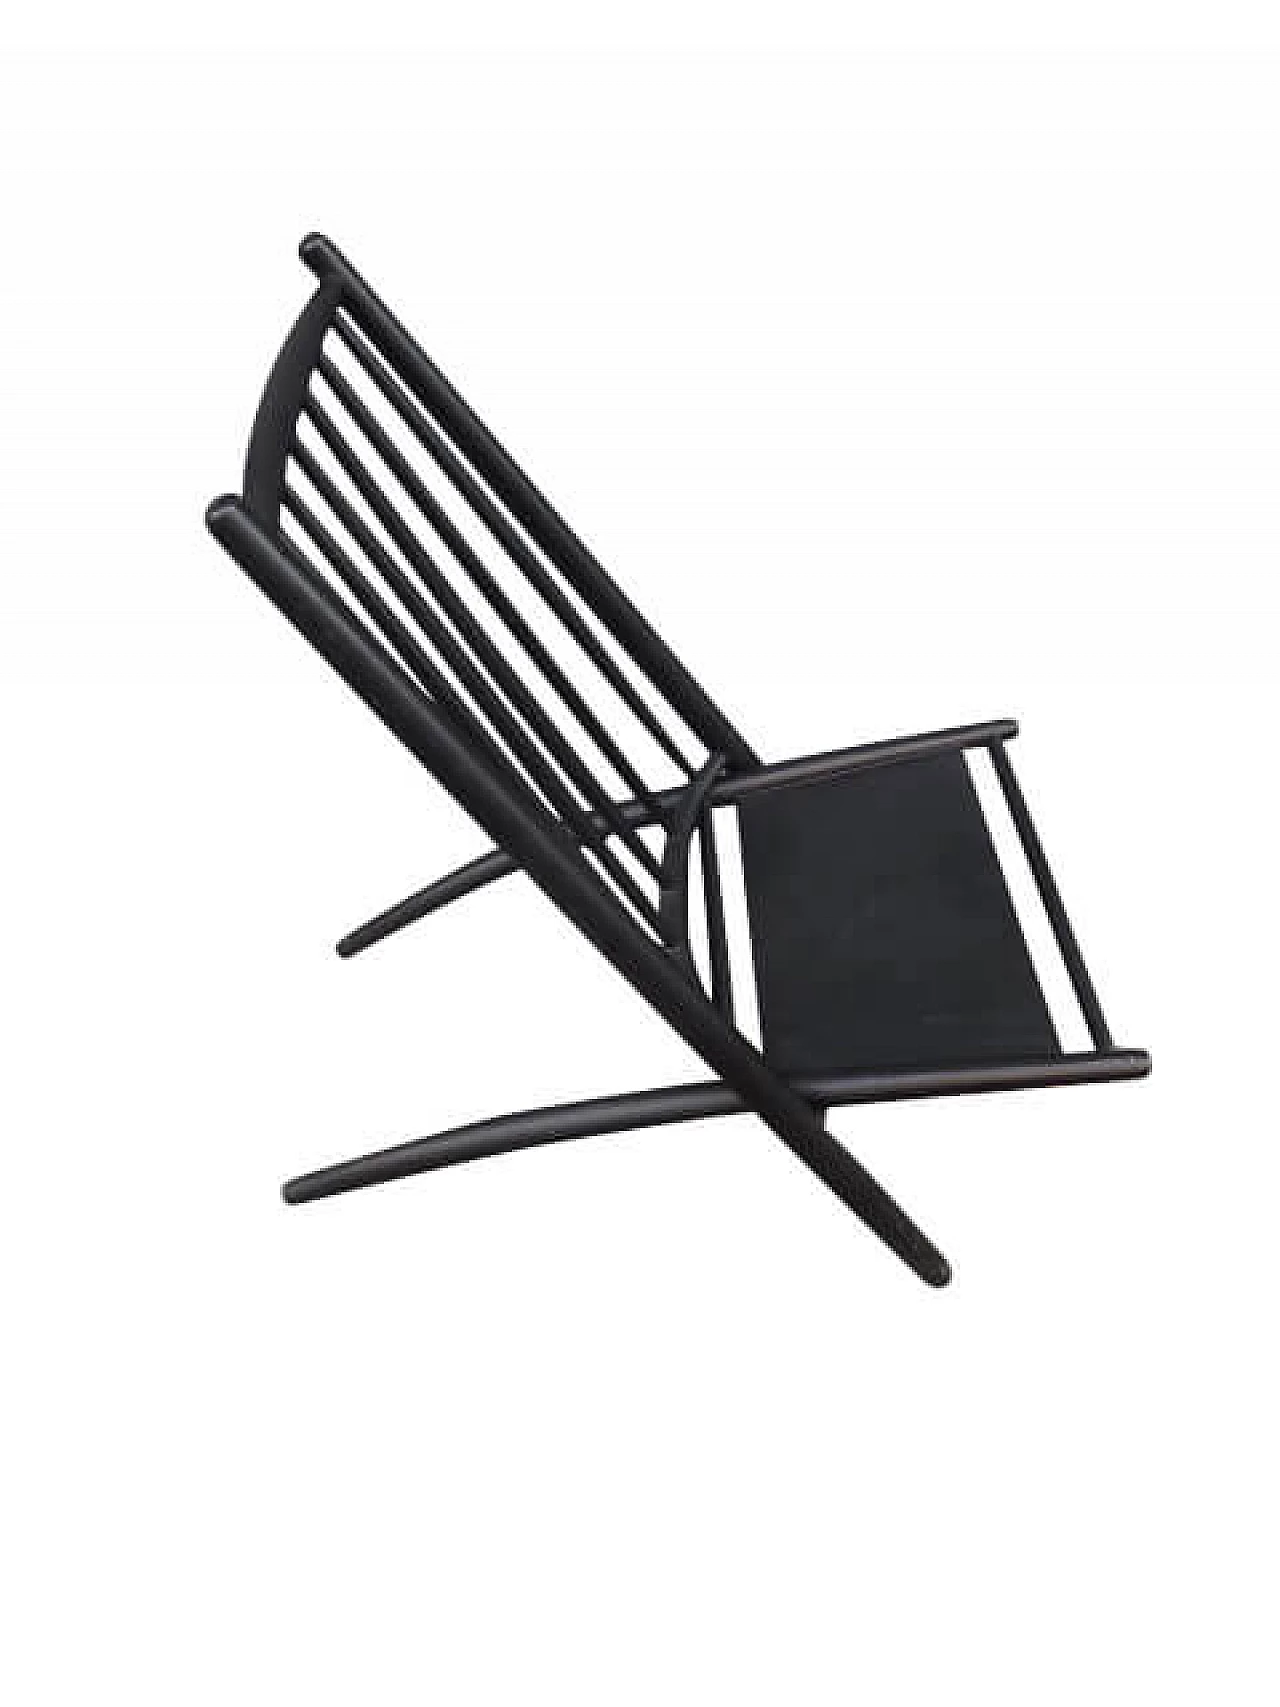 4 Kongo Chairs by Ilmari Tapiovaara for Haga Fors, 1950s 1181060